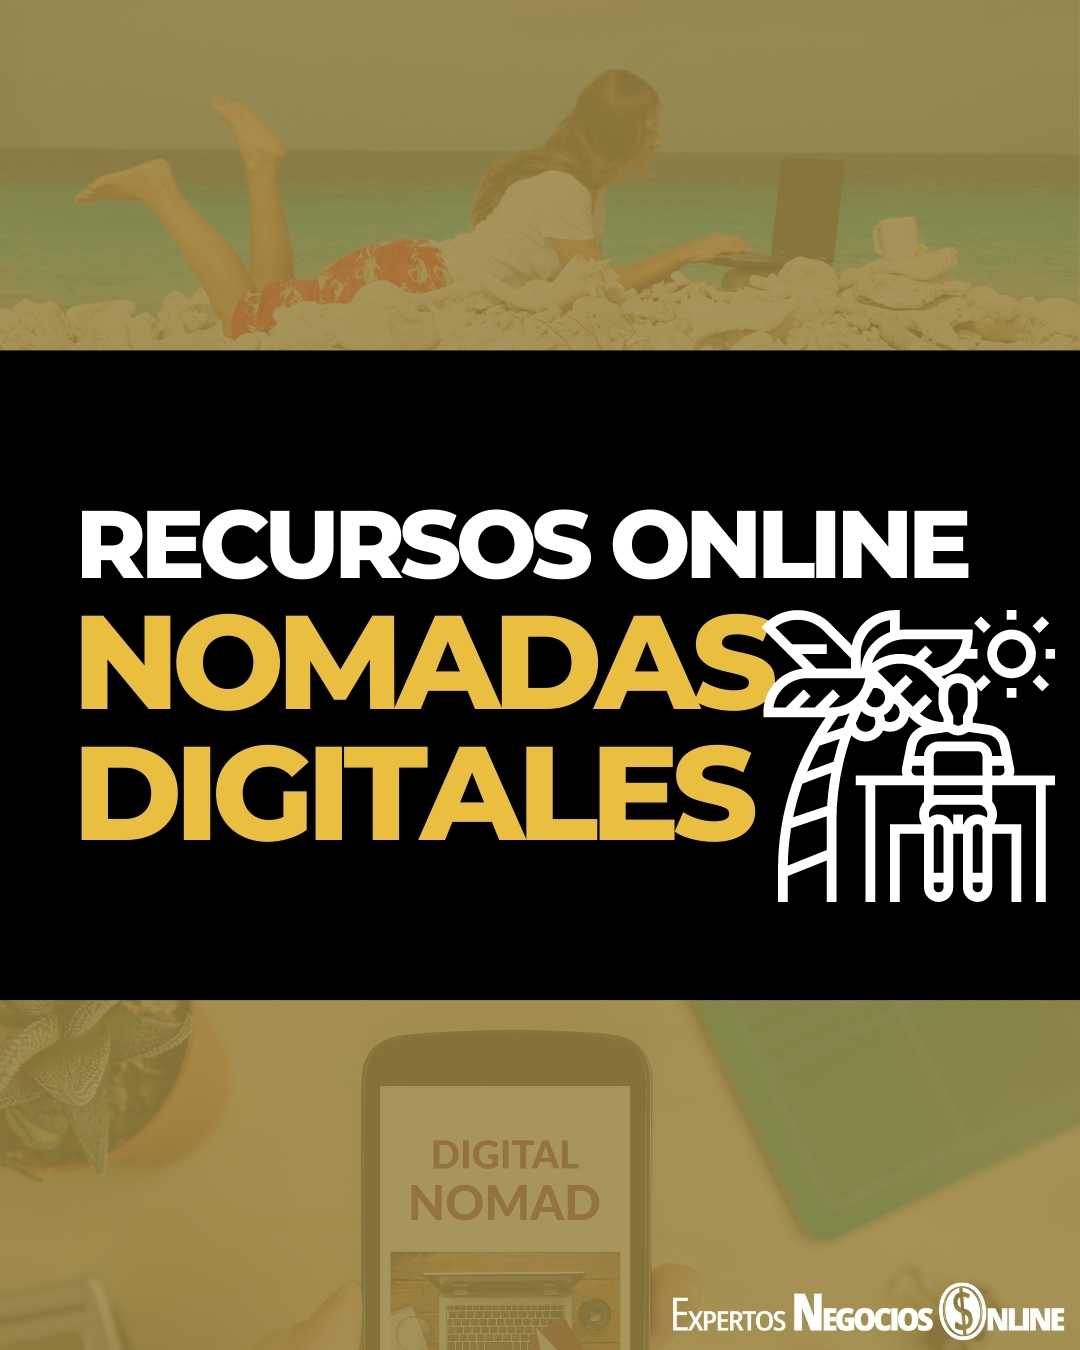 Recursos online para nómadas digitales